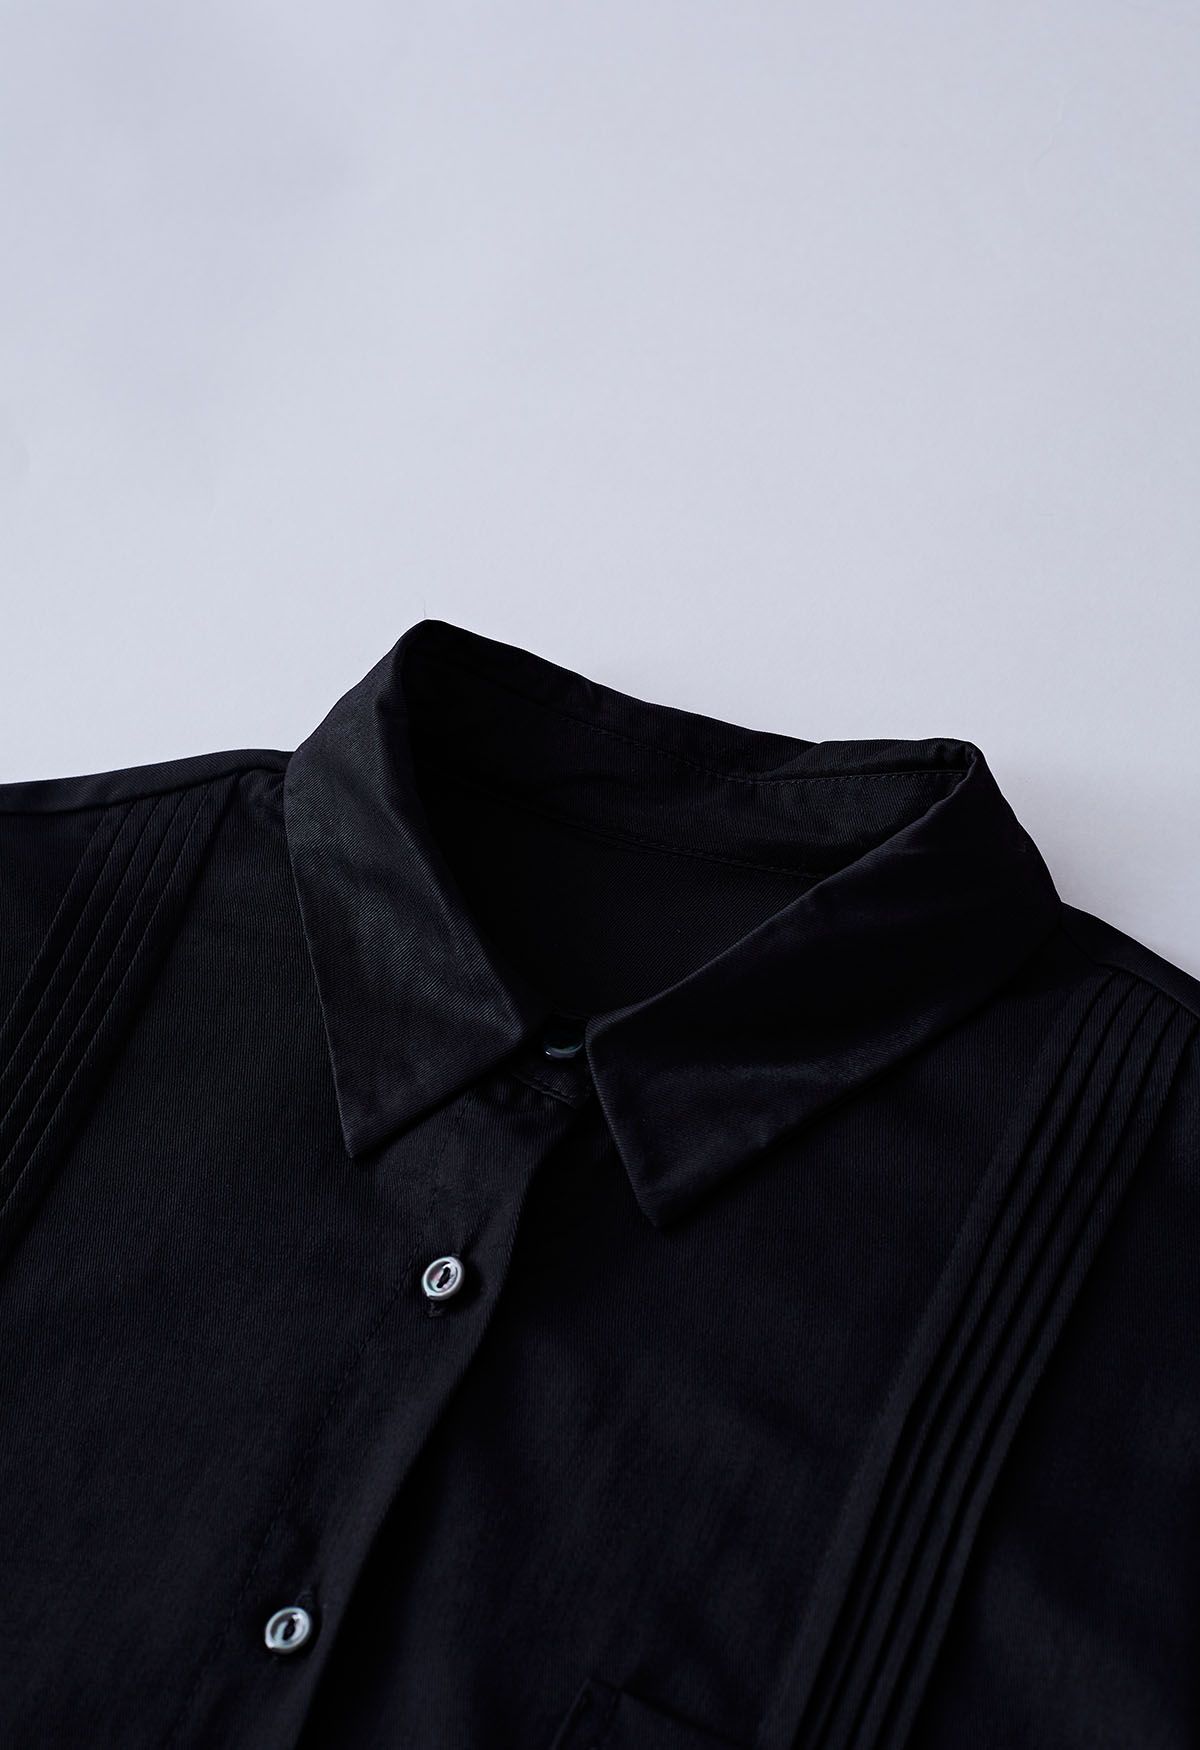 Sleek Pintuck Detail Button Down Shirt in Black